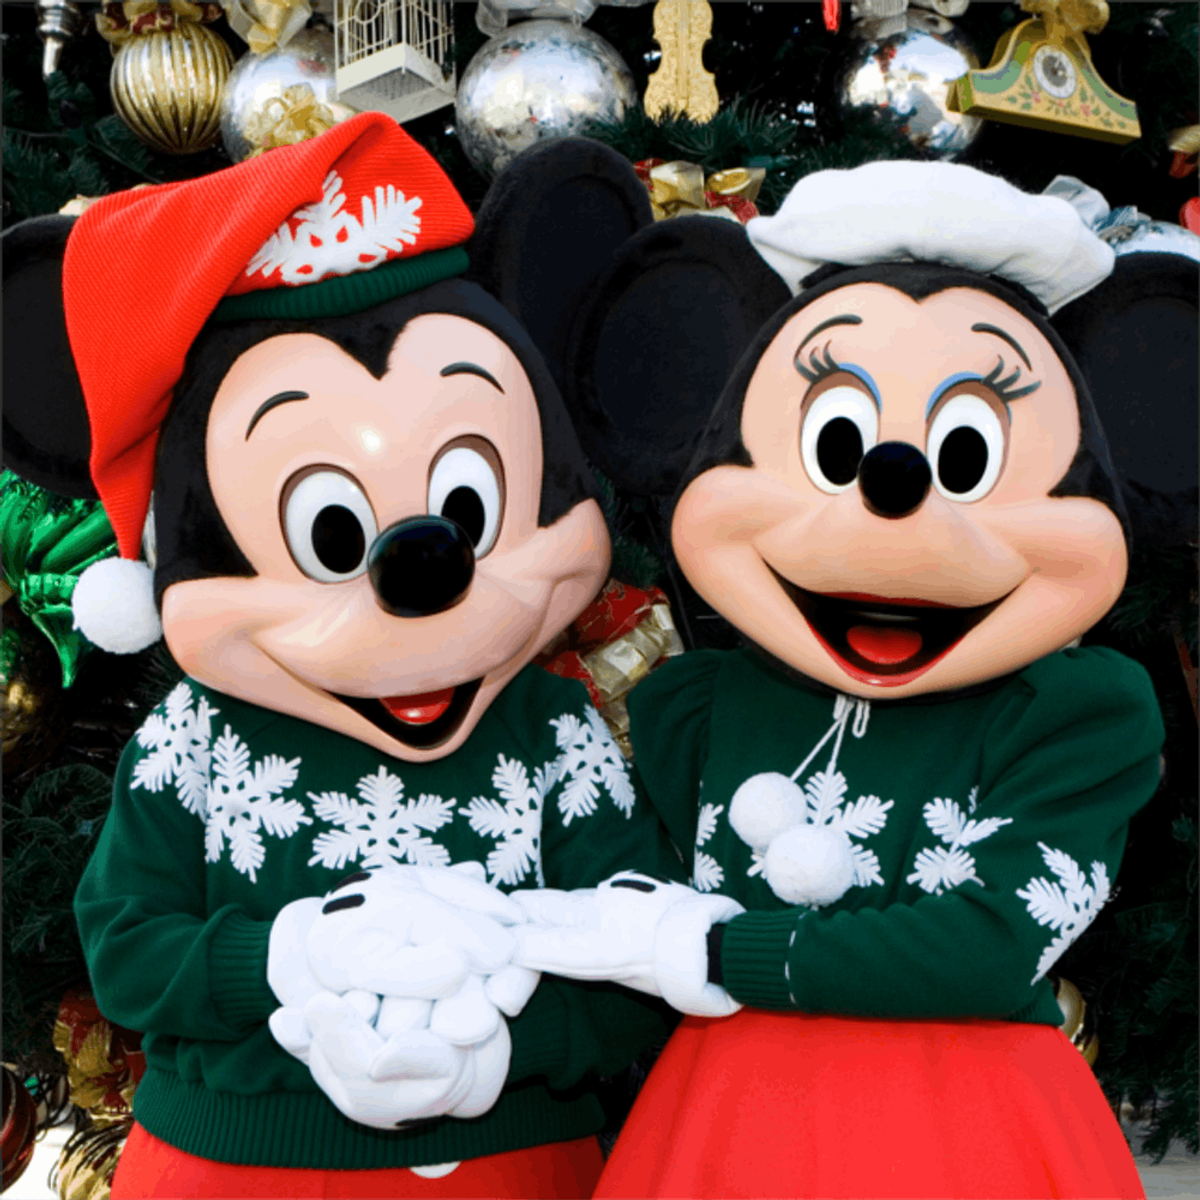 10 Unmissable Moments of Disneyland Holiday Magic